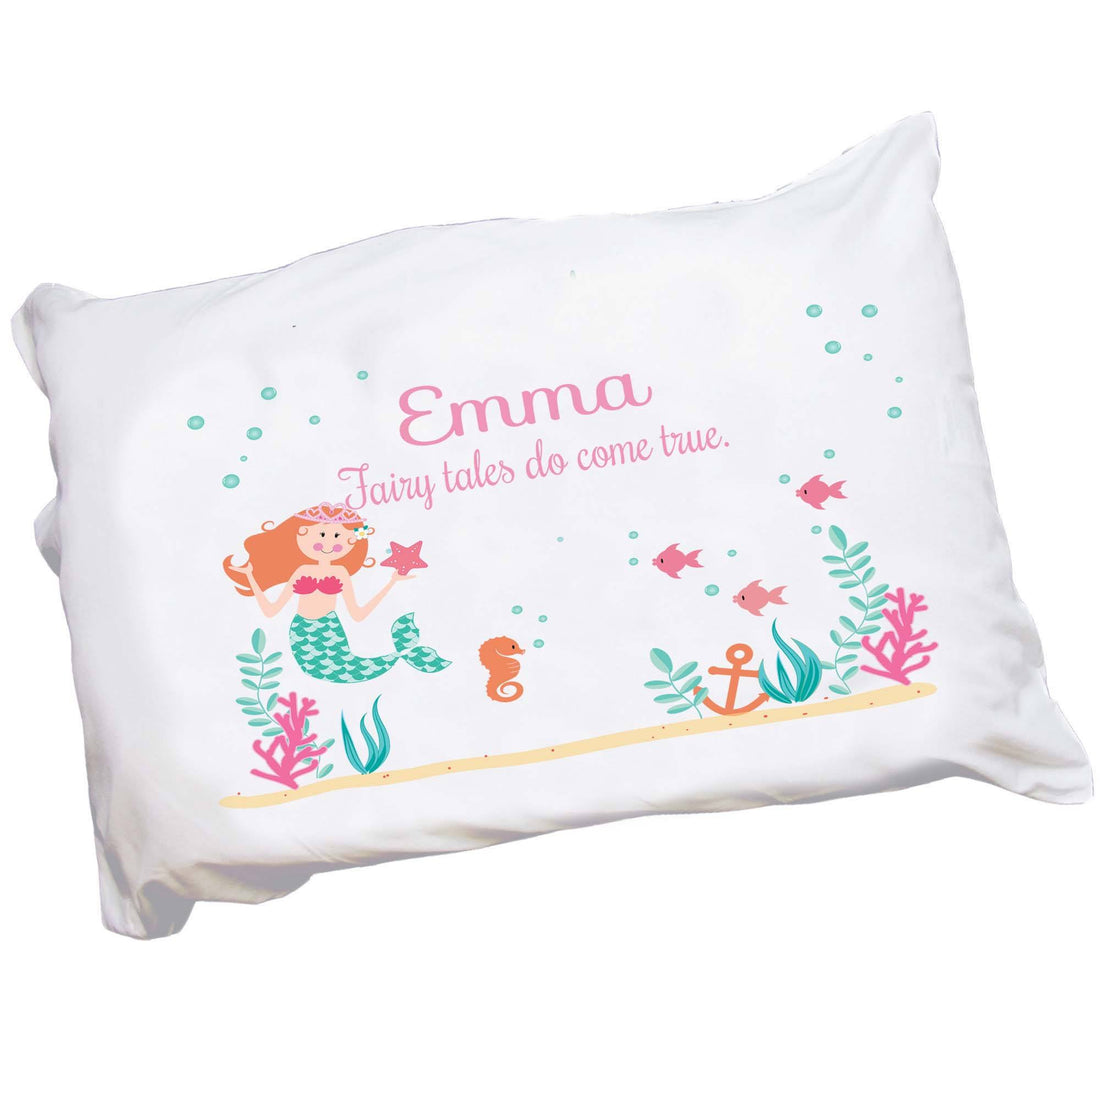 Girls Personalized Little Mermaid Pillowcase Bedding